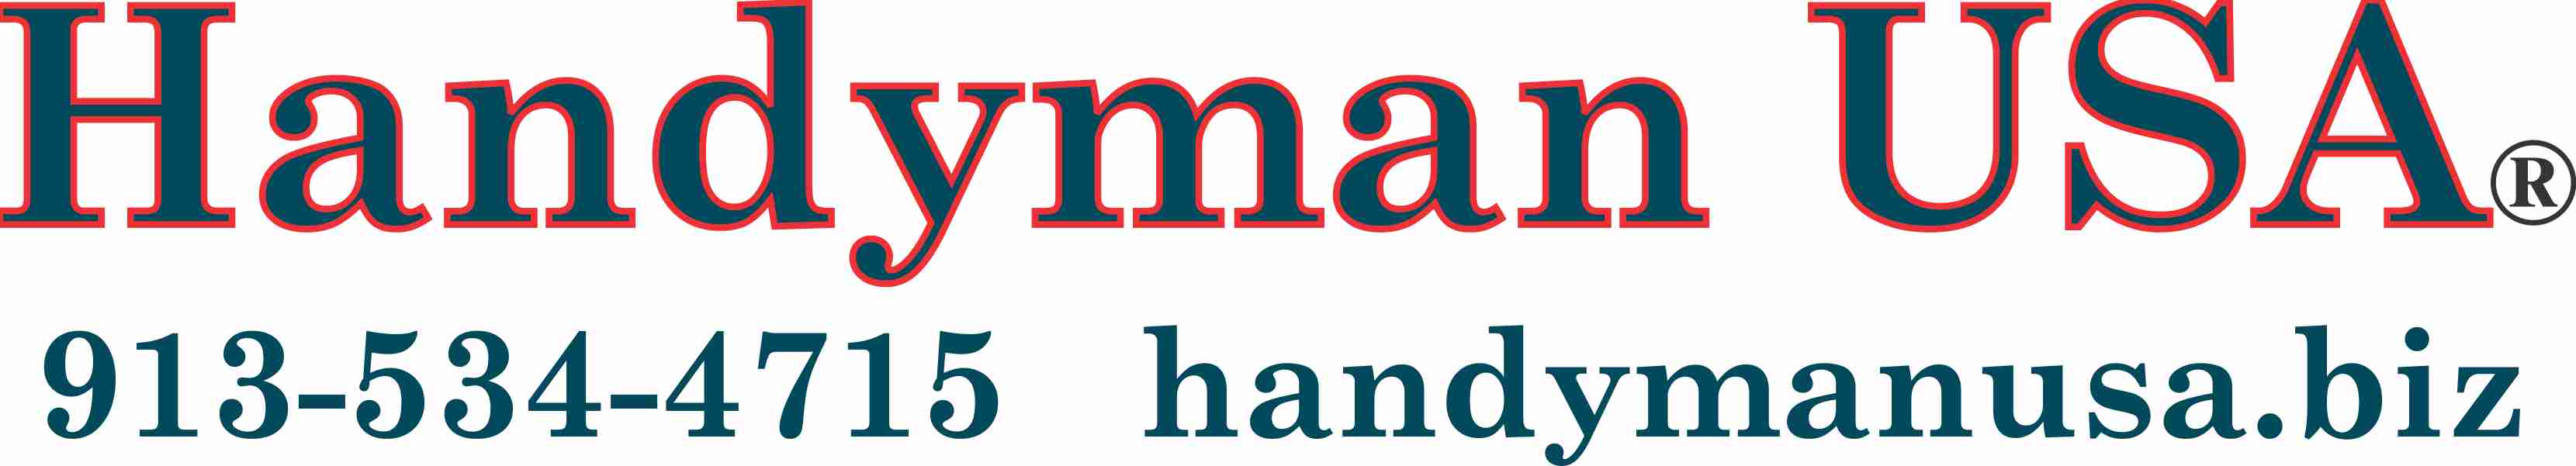 Handyman USA, Inc. Logo